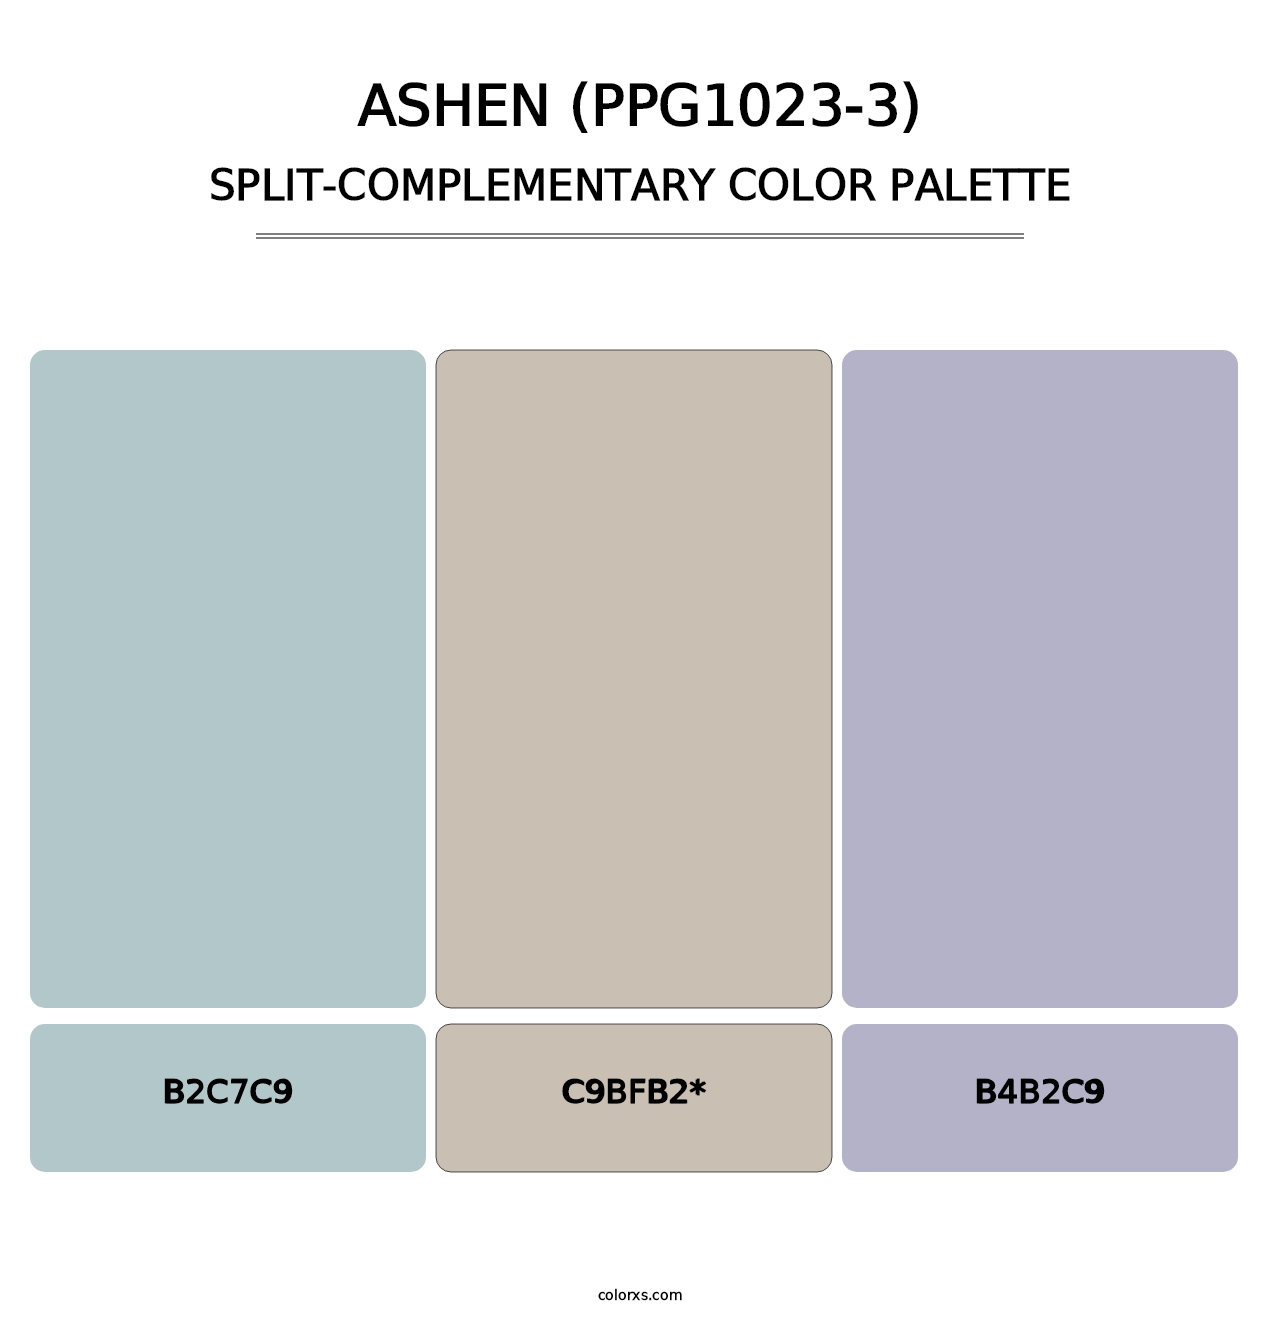 Ashen (PPG1023-3) - Split-Complementary Color Palette